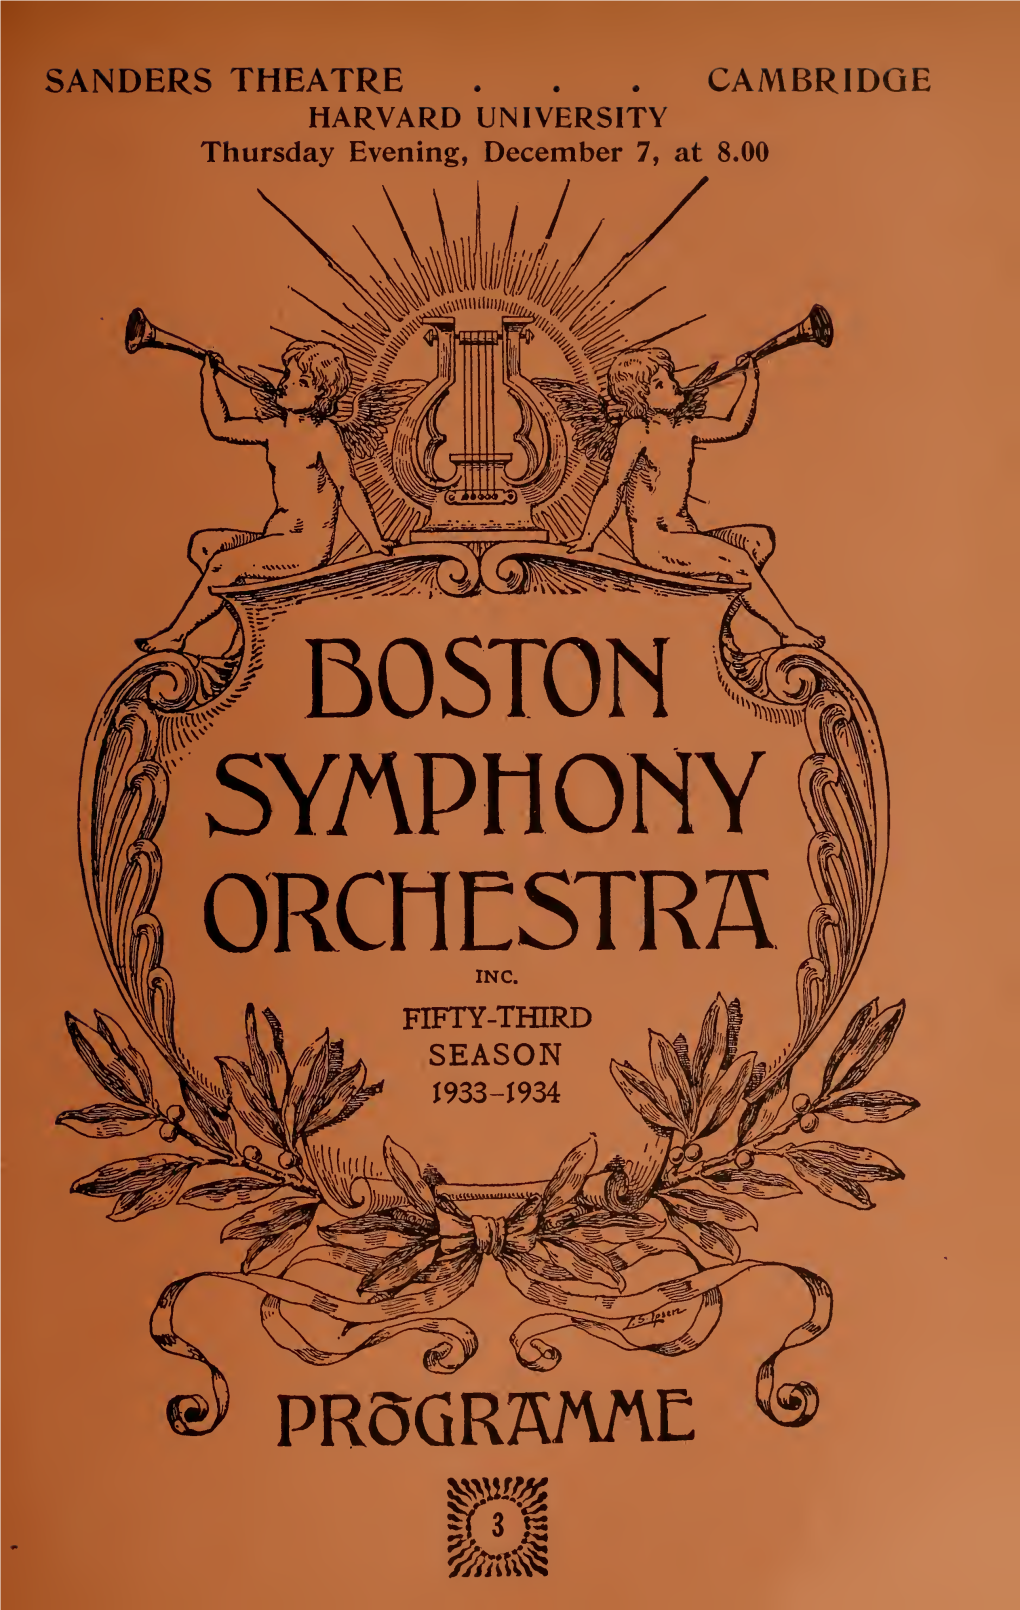 Boston Symphony Orchestra Concert Programs, Season 53,1933